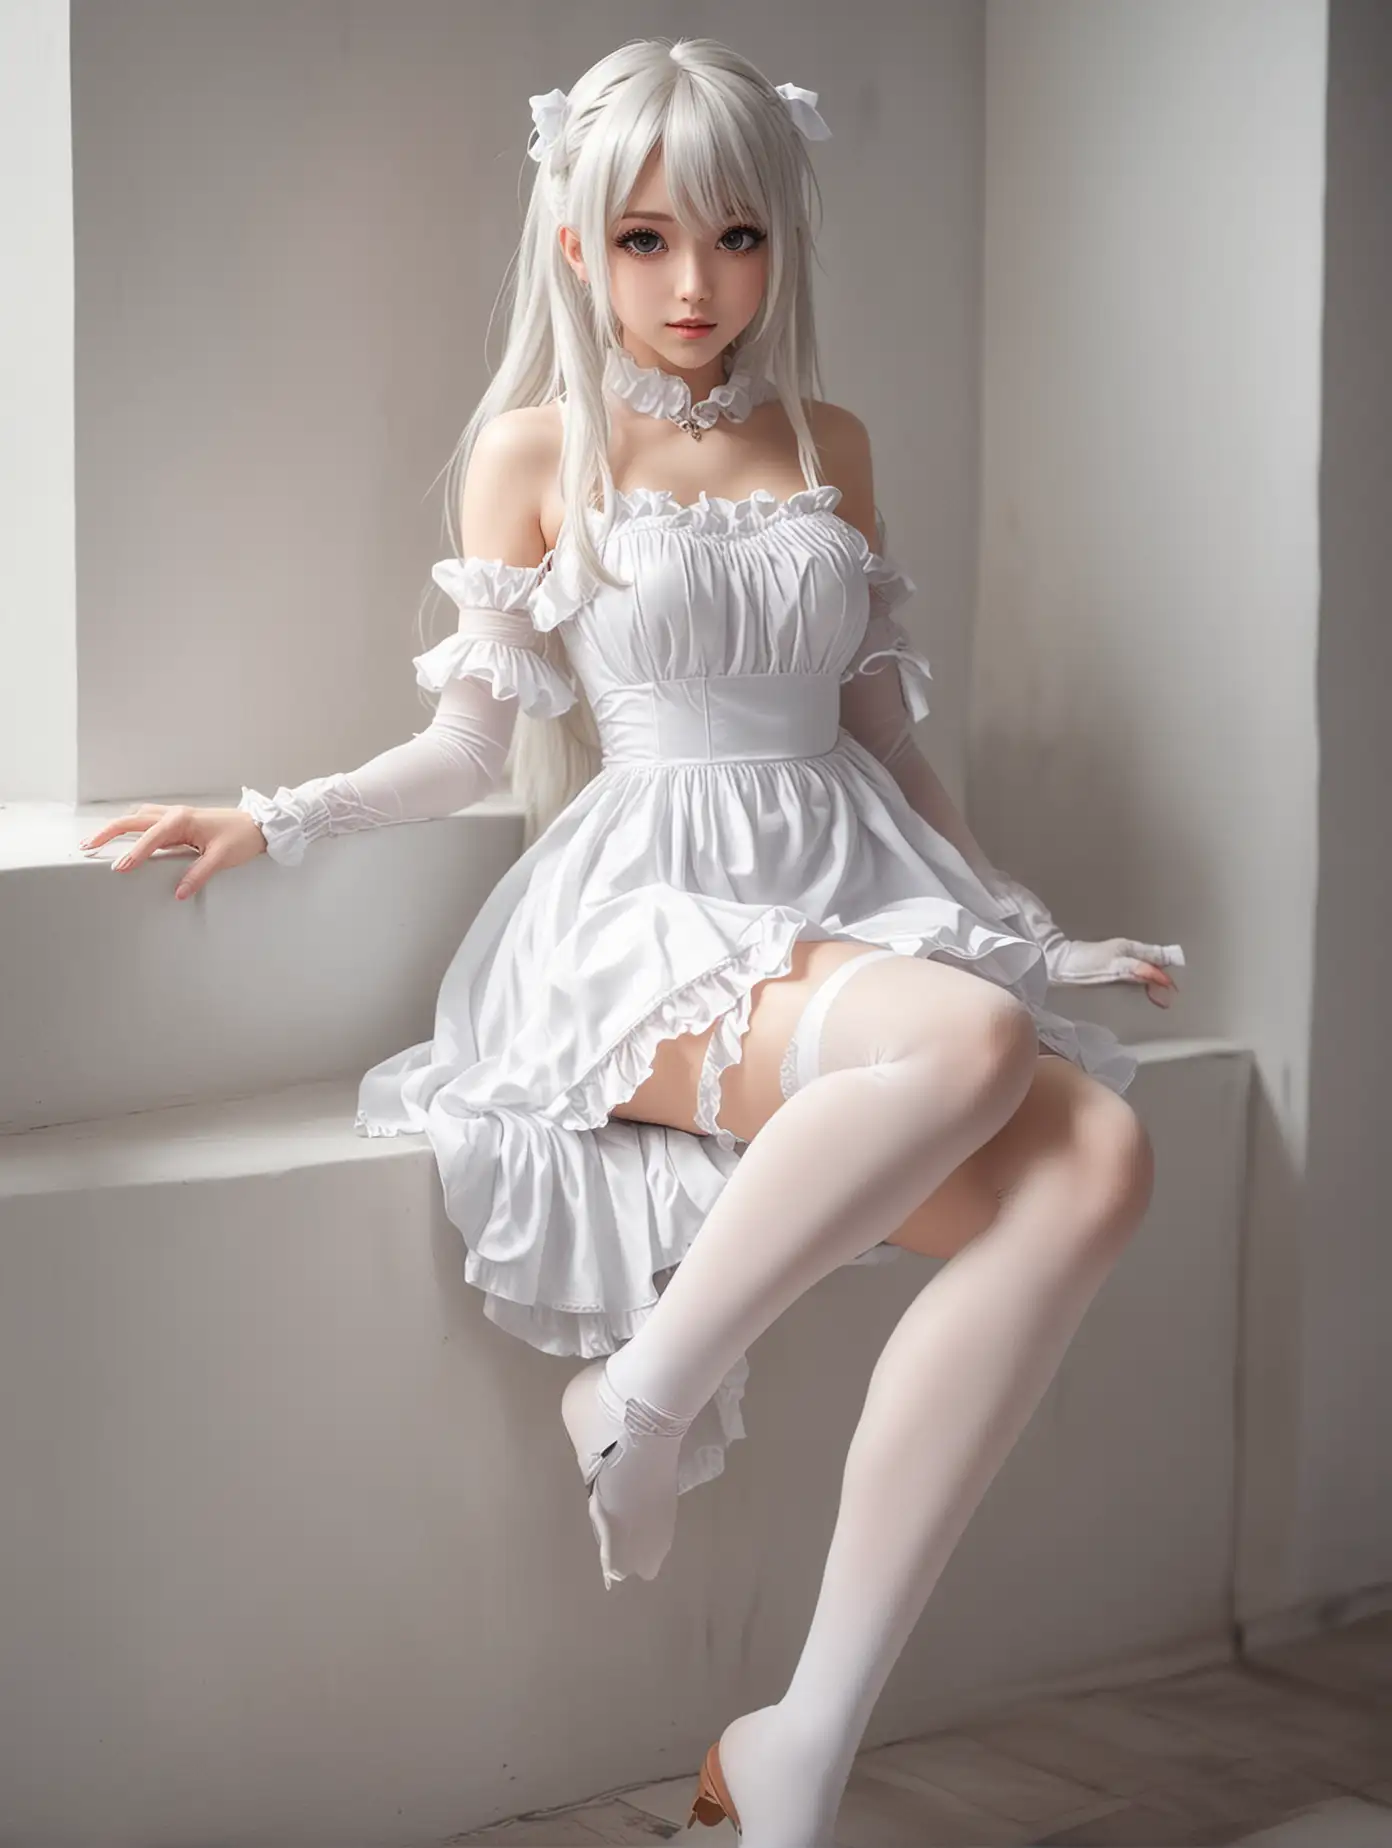 Seductive Anime Girl in Elegant White Dress and Stockings